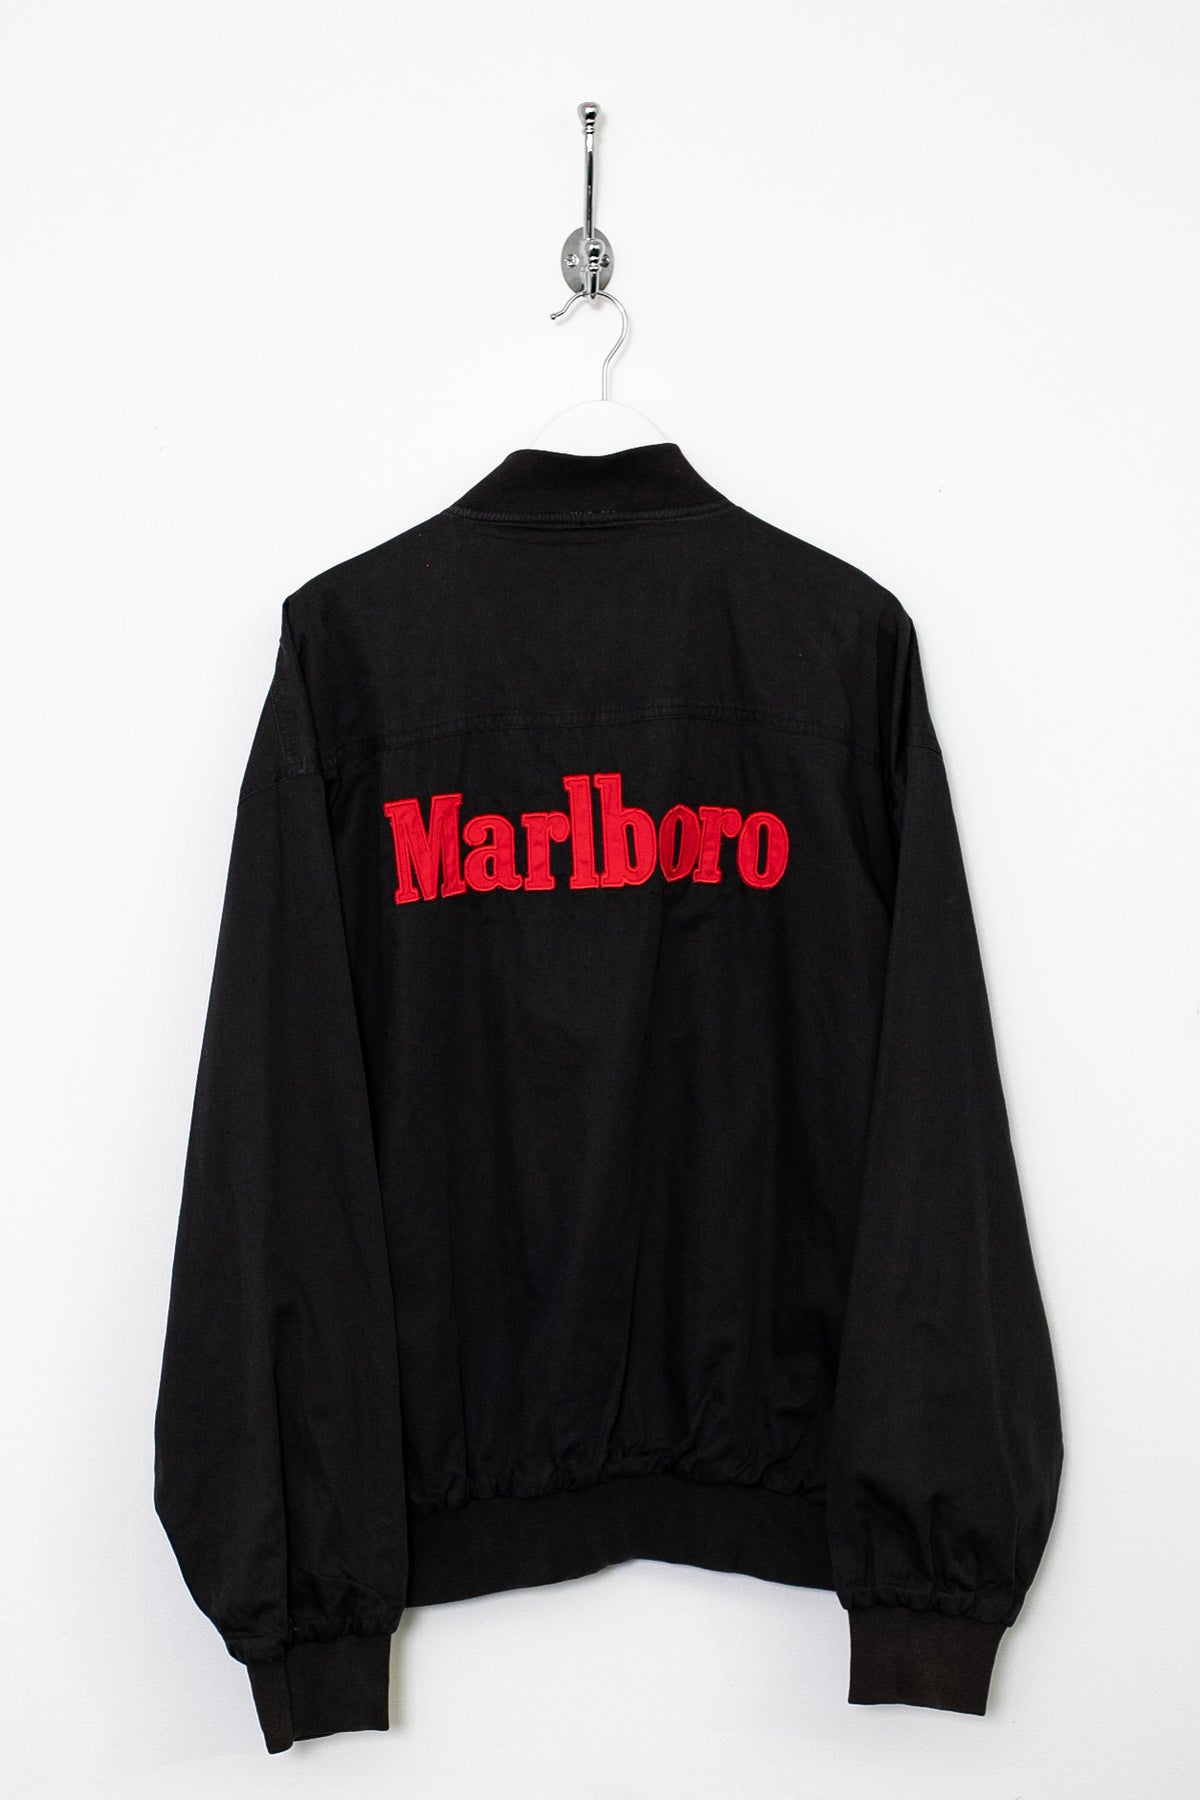 90s Marlboro Reversible Jacket (L)